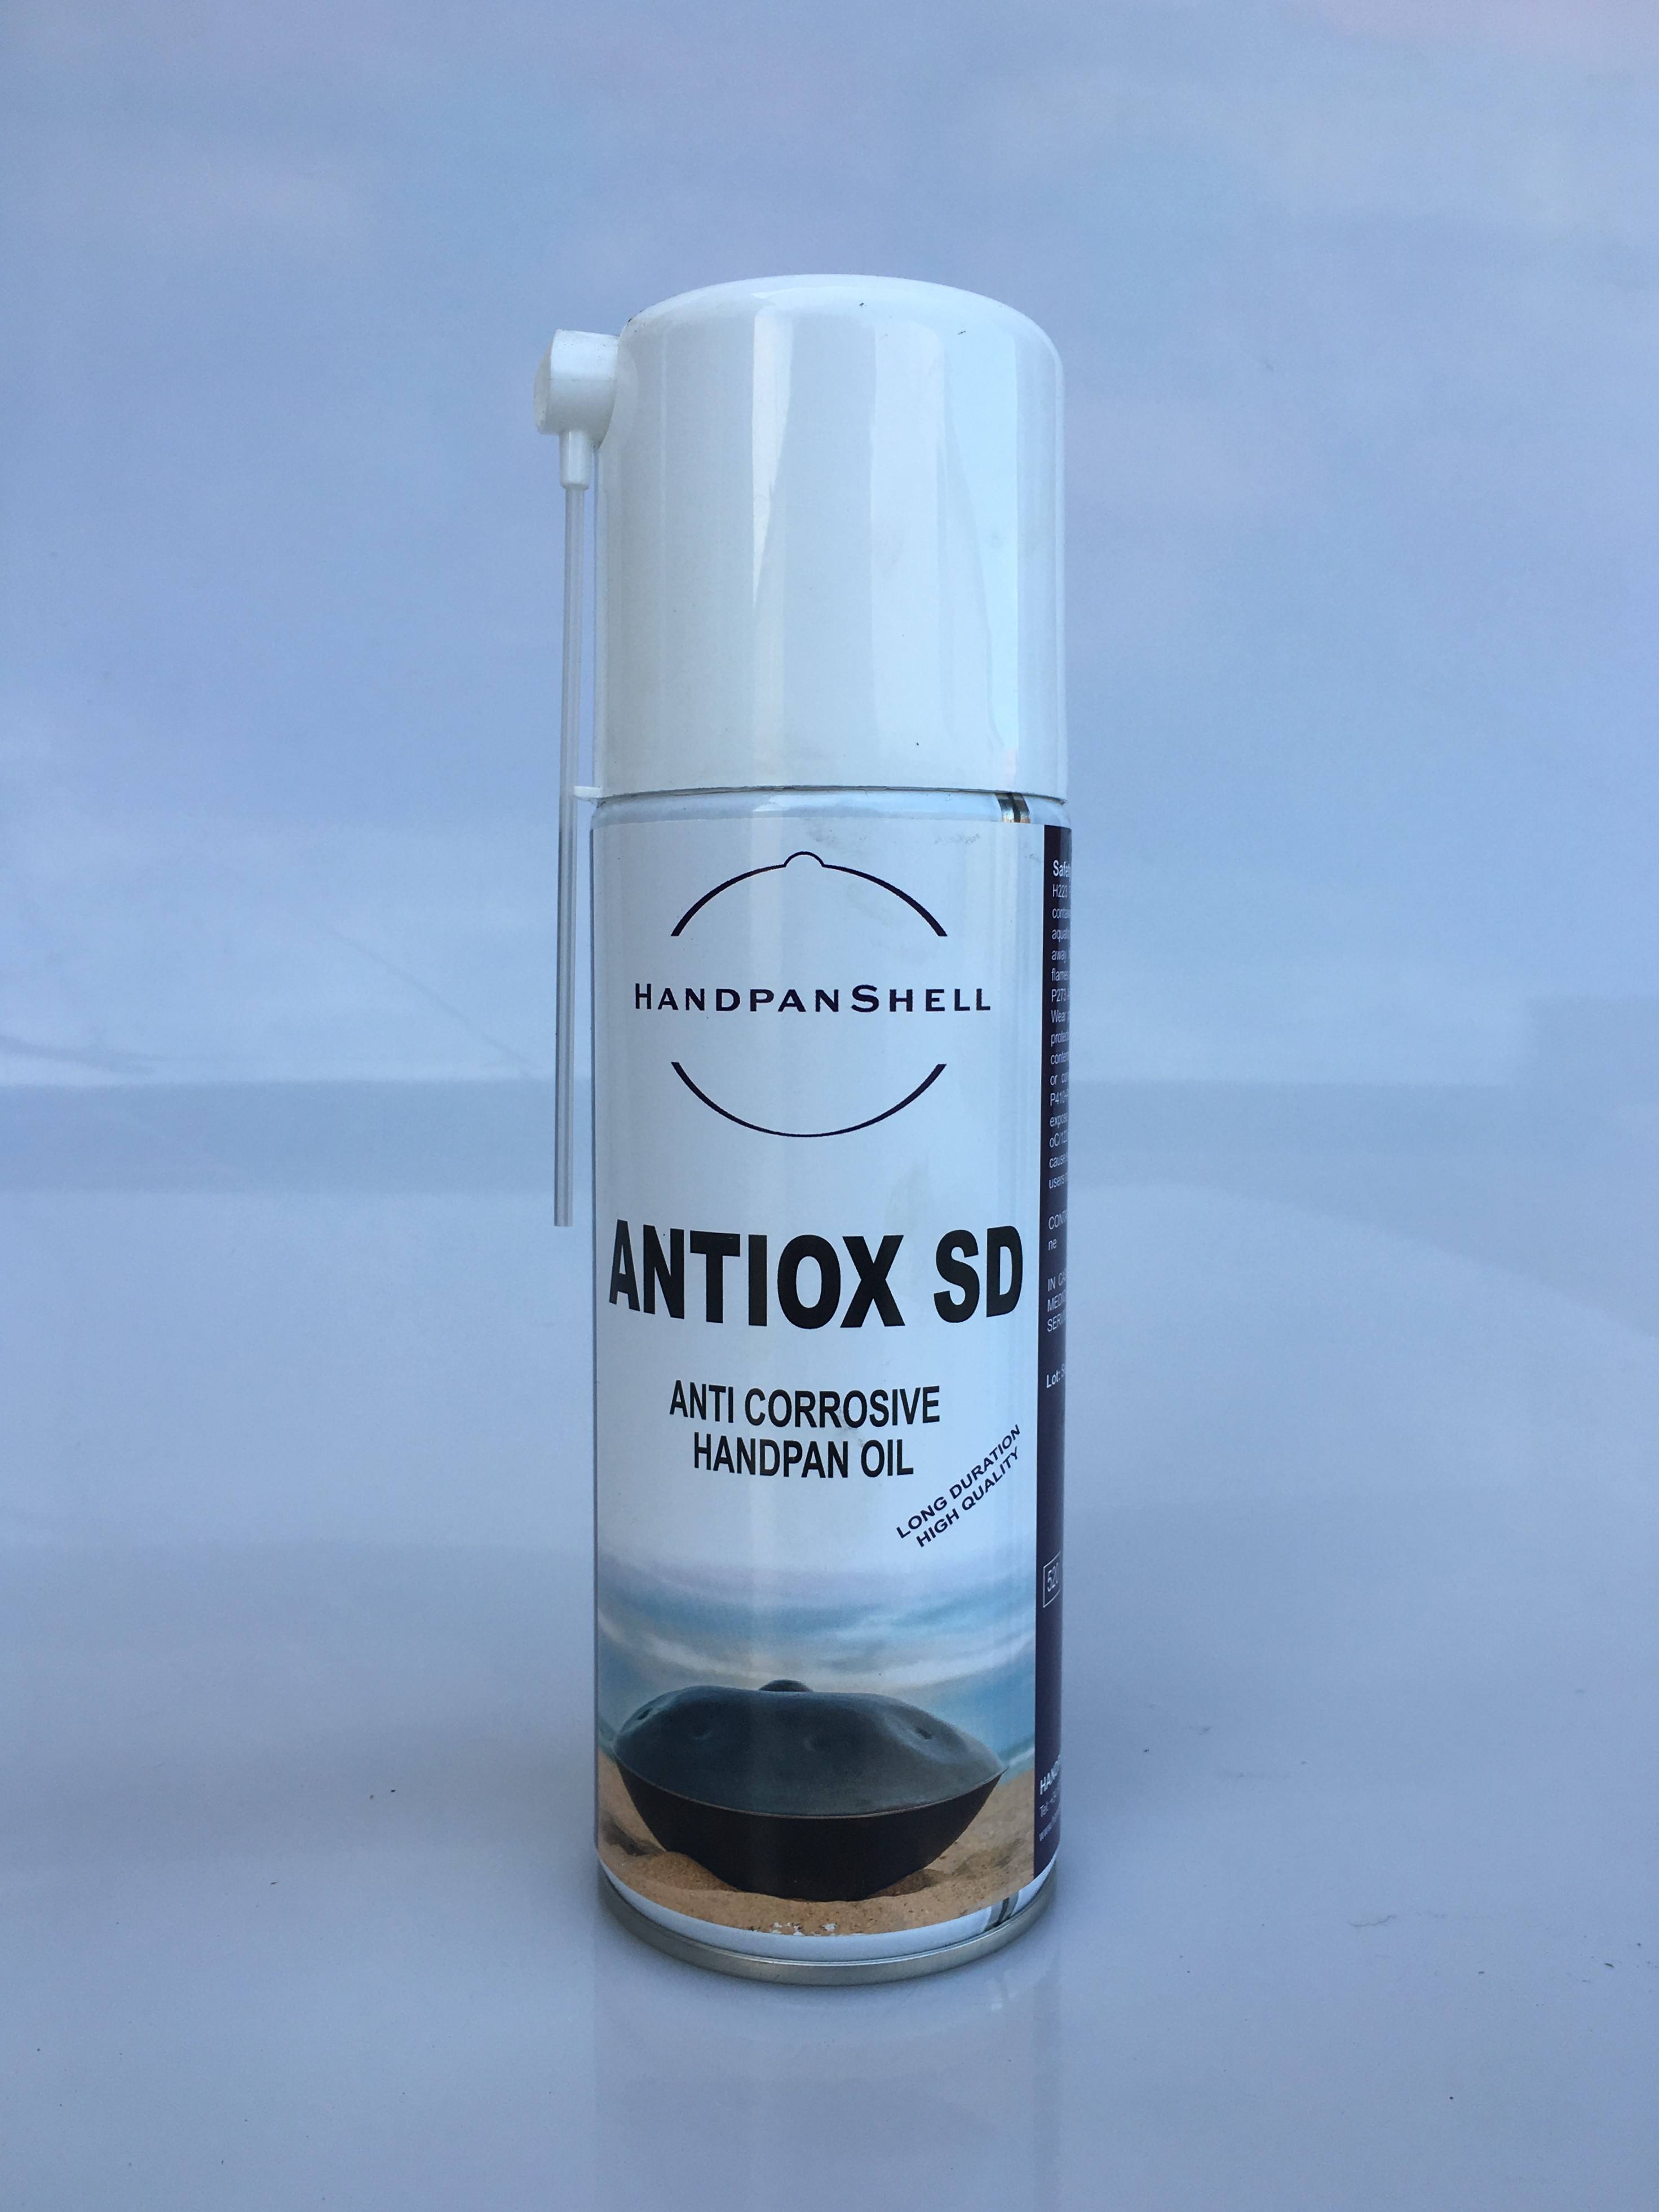 Anti-oxidant